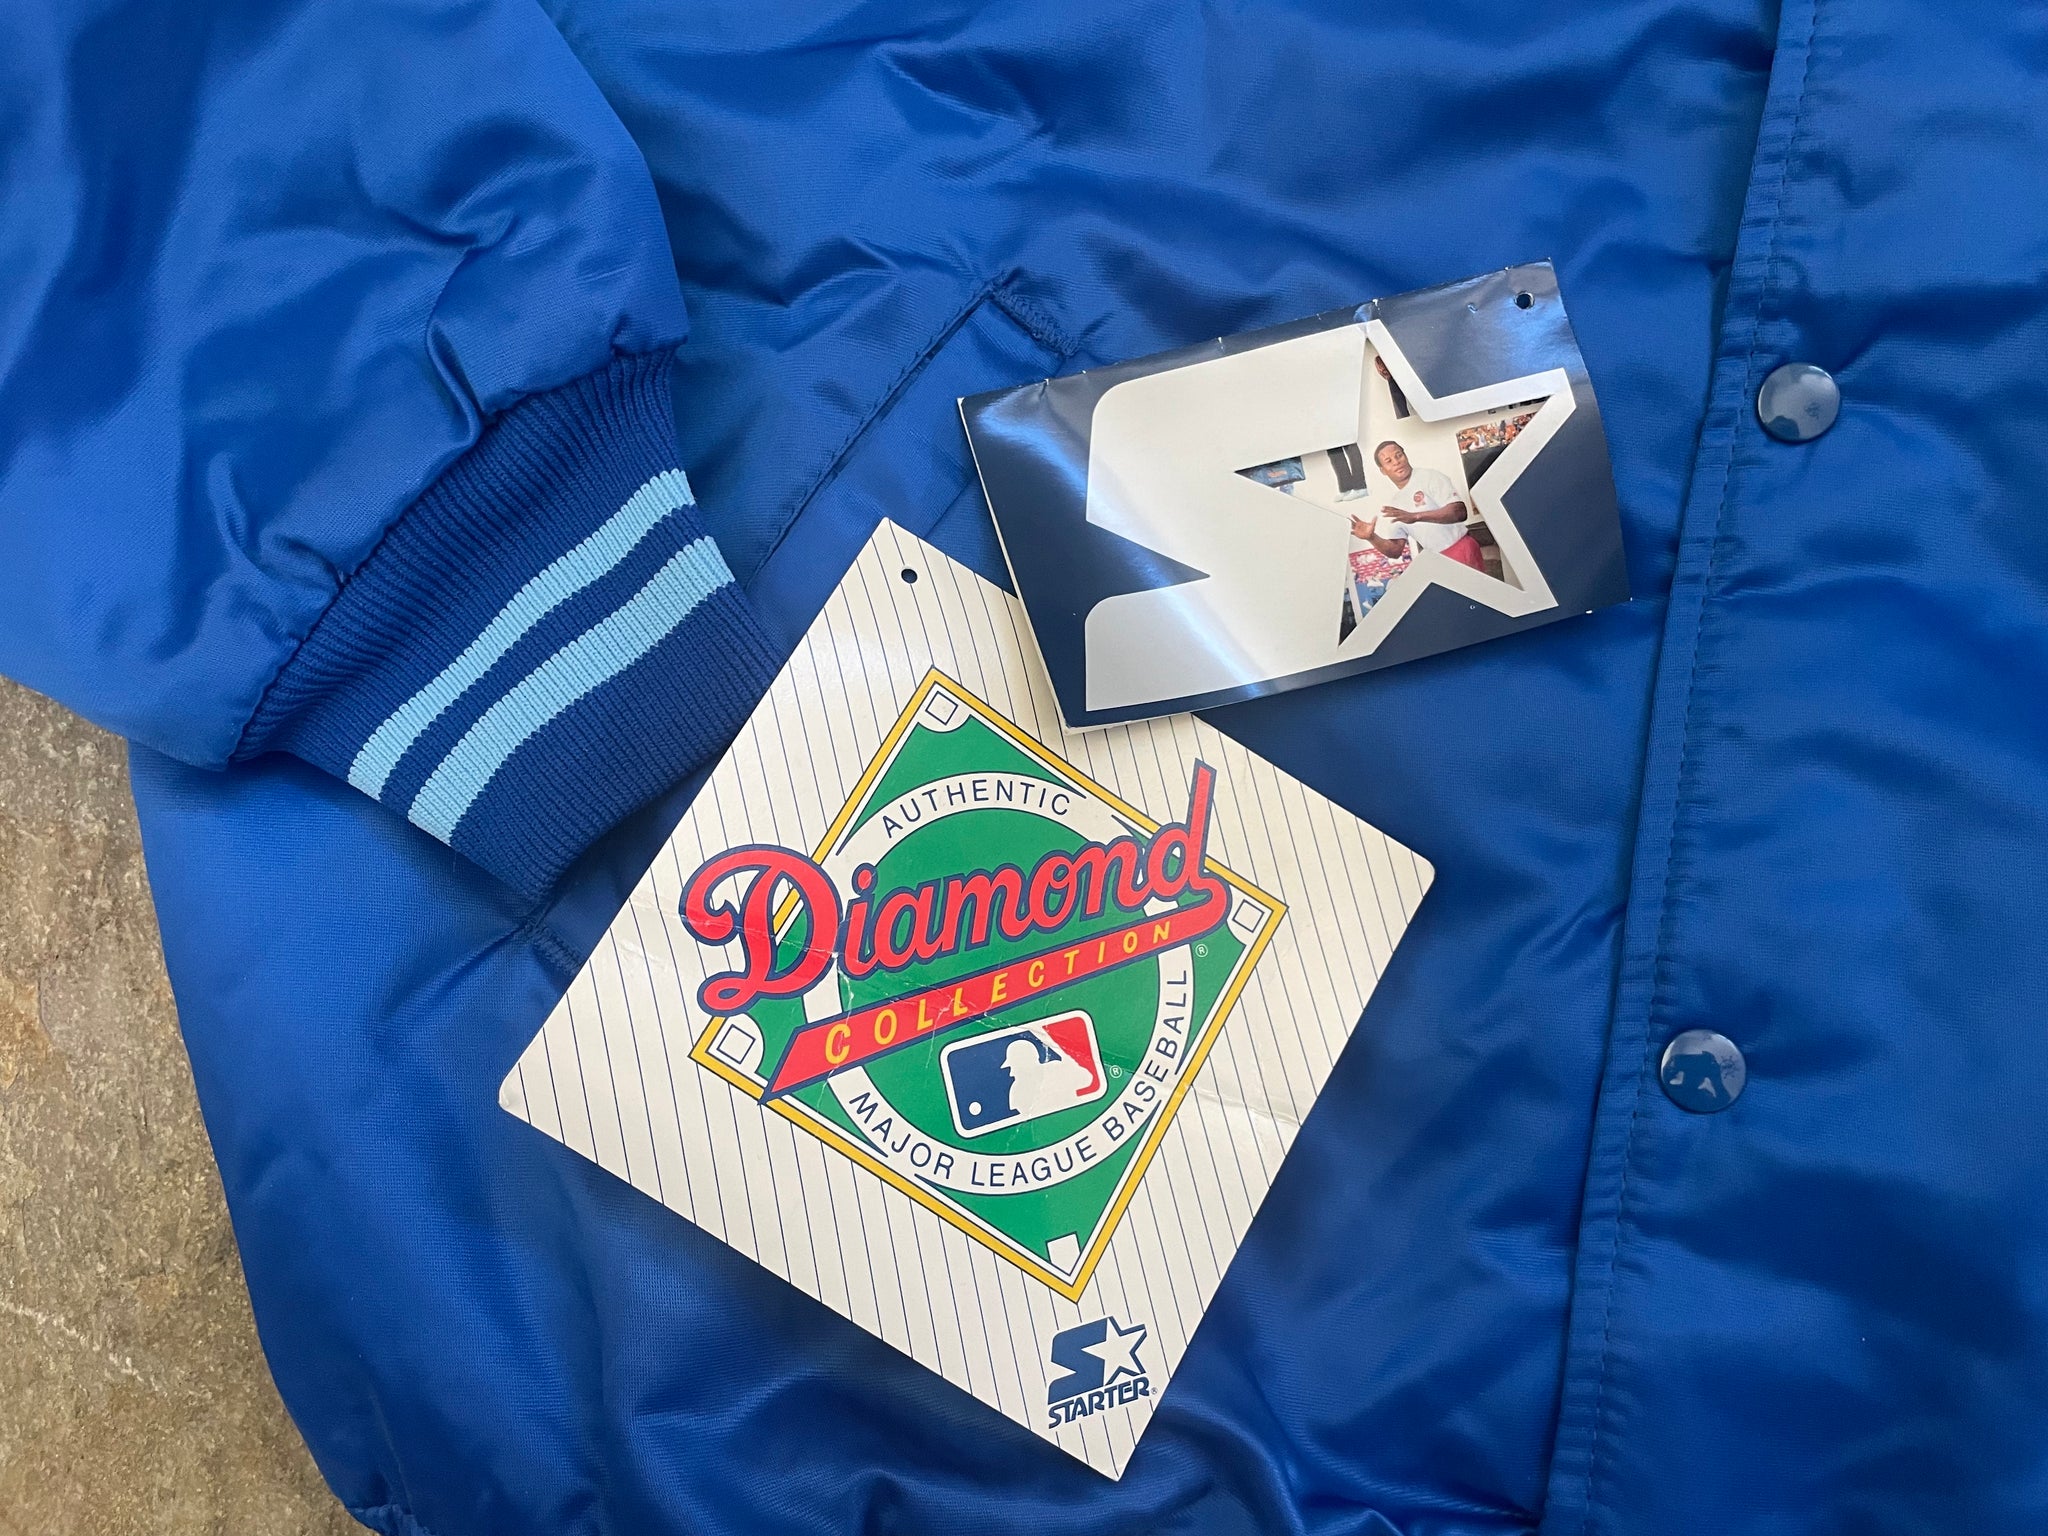 Vintage St. Louis Blues Starter Satin Hockey Jacket, Size Large